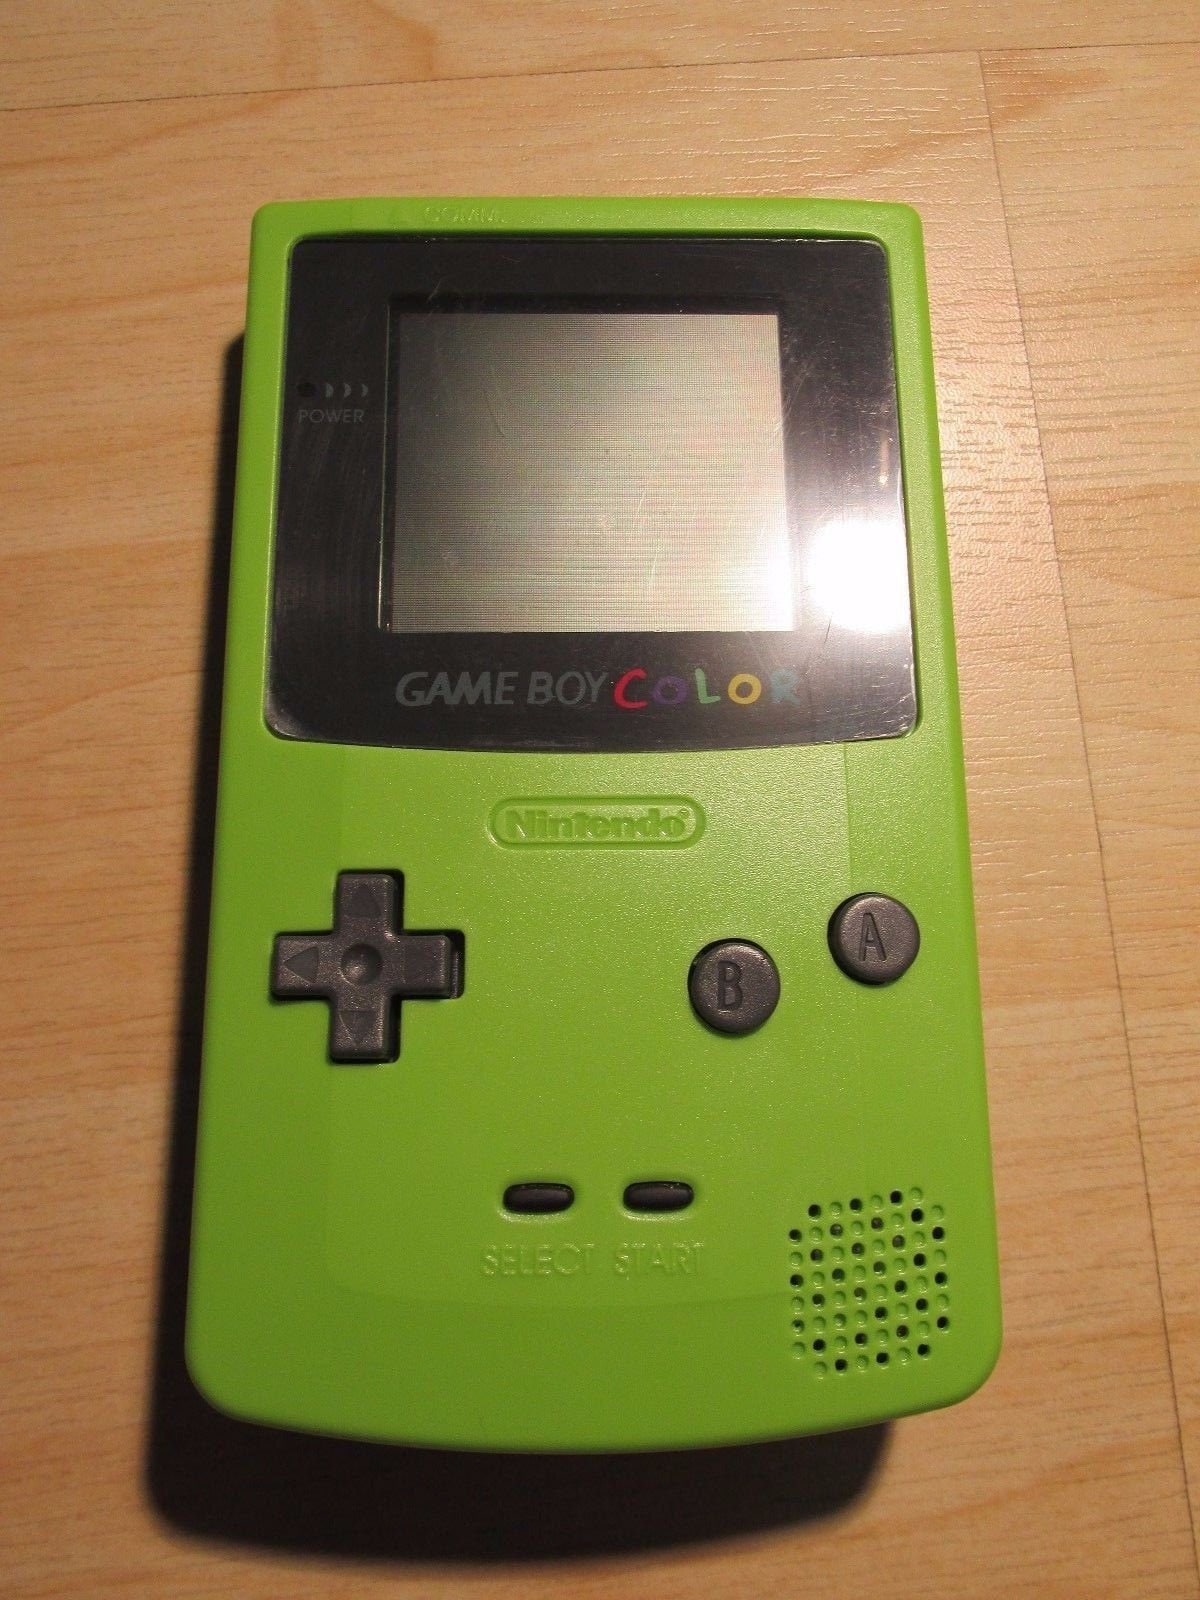 Restored to Like New renewed Nintendo Gameboy Game Boy Color - Etsy